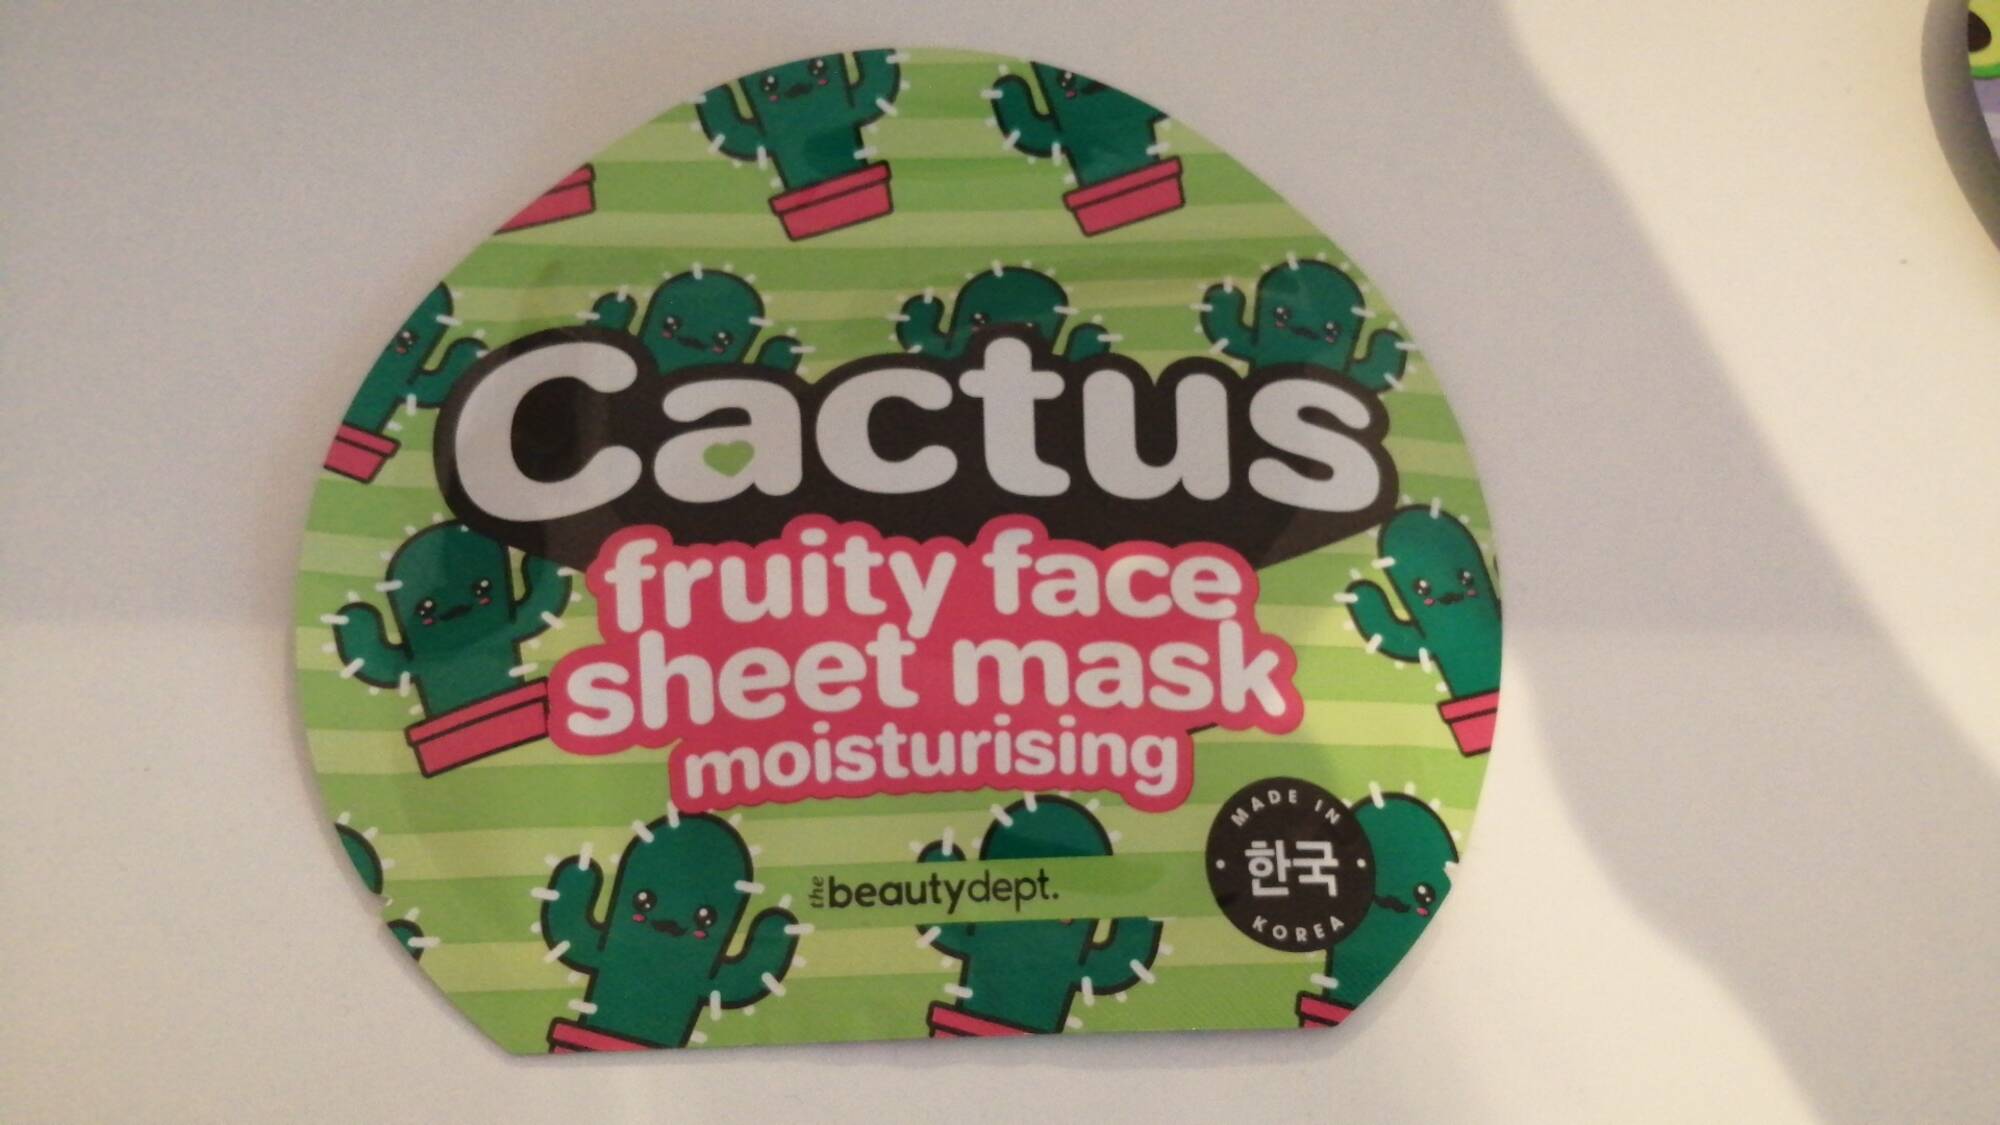 THE BEAUTY DEPT - Cactus - Fruity face sheet mask